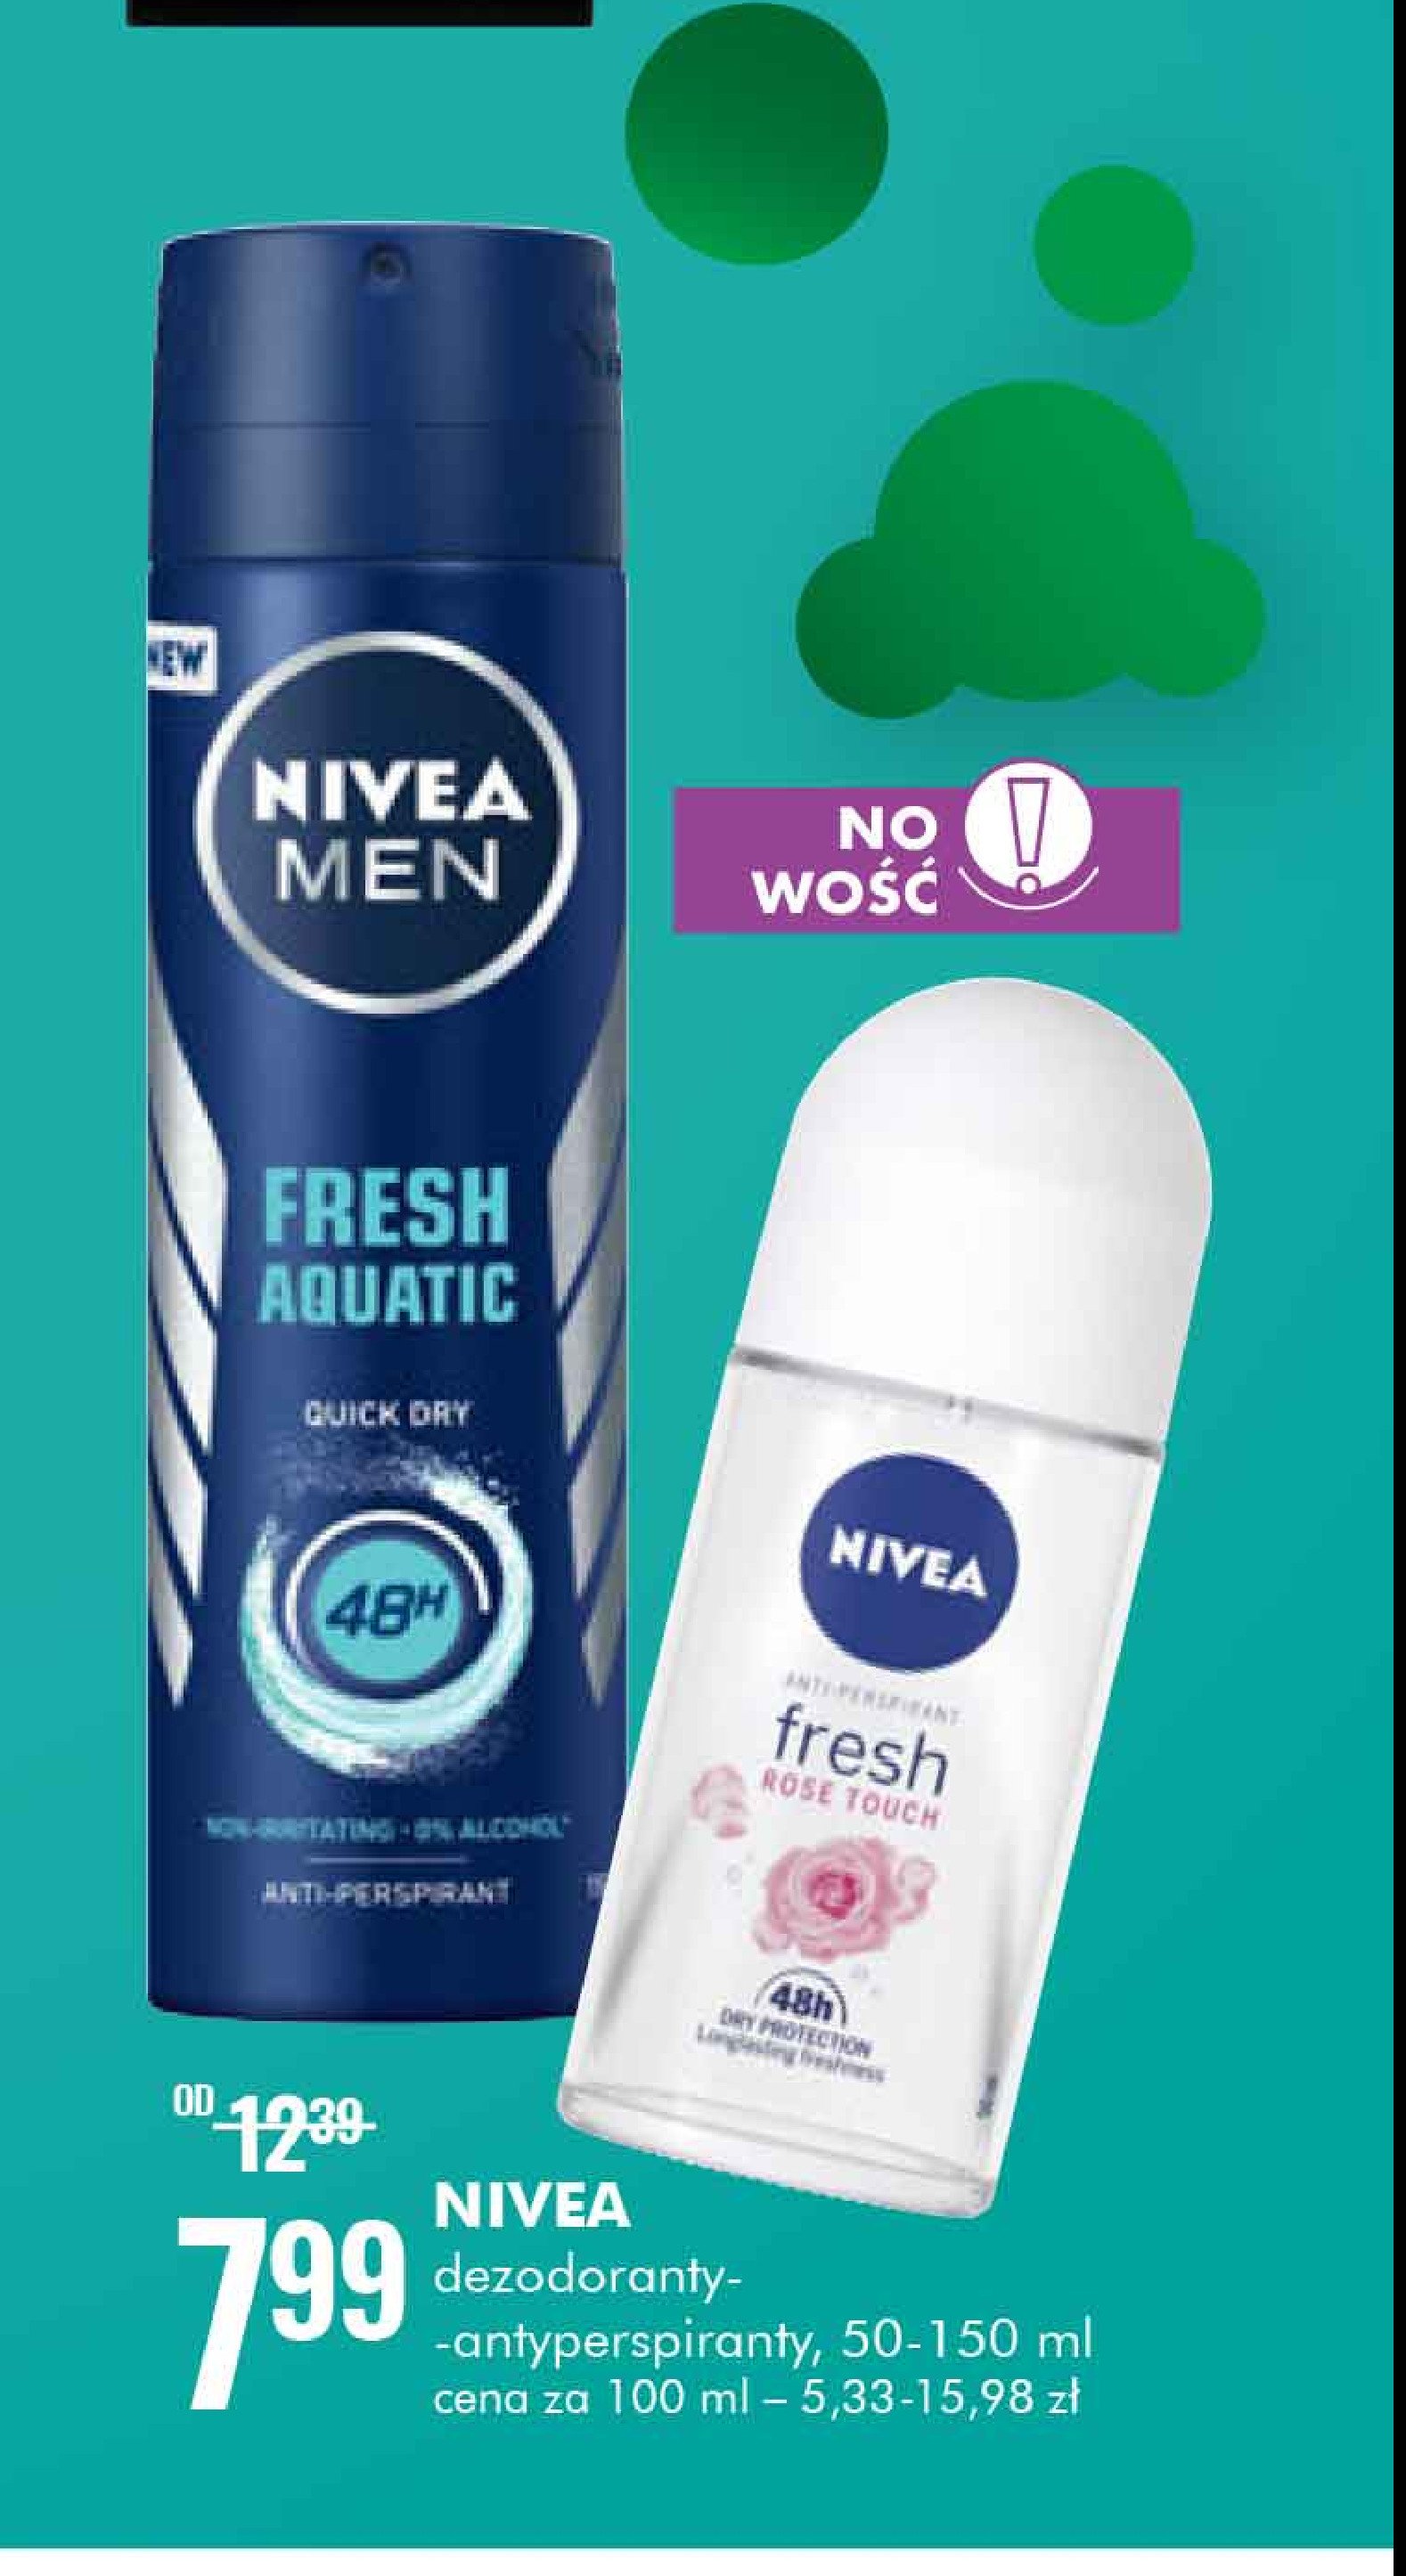 Antyperspirant fresh aquatic Nivea men promocja